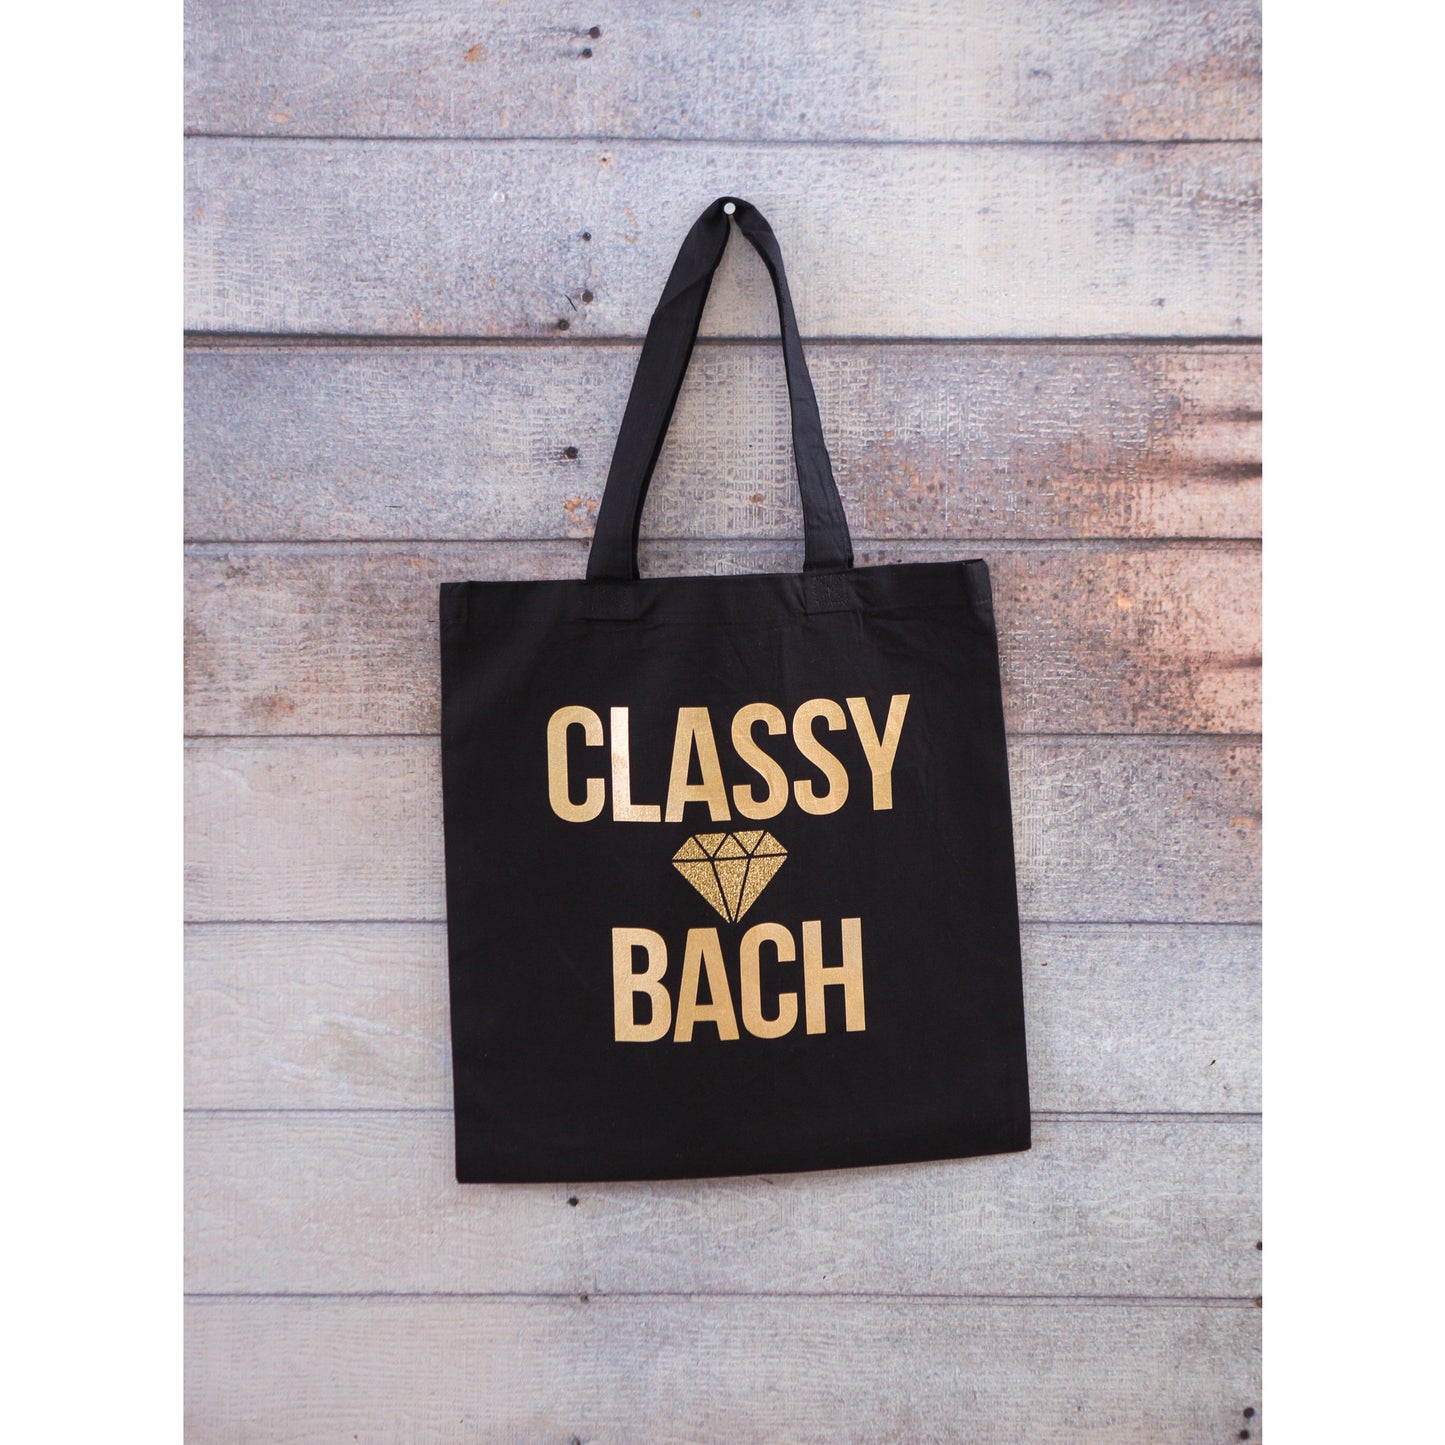 Bachelorette Tote Bag "Classy Bach"